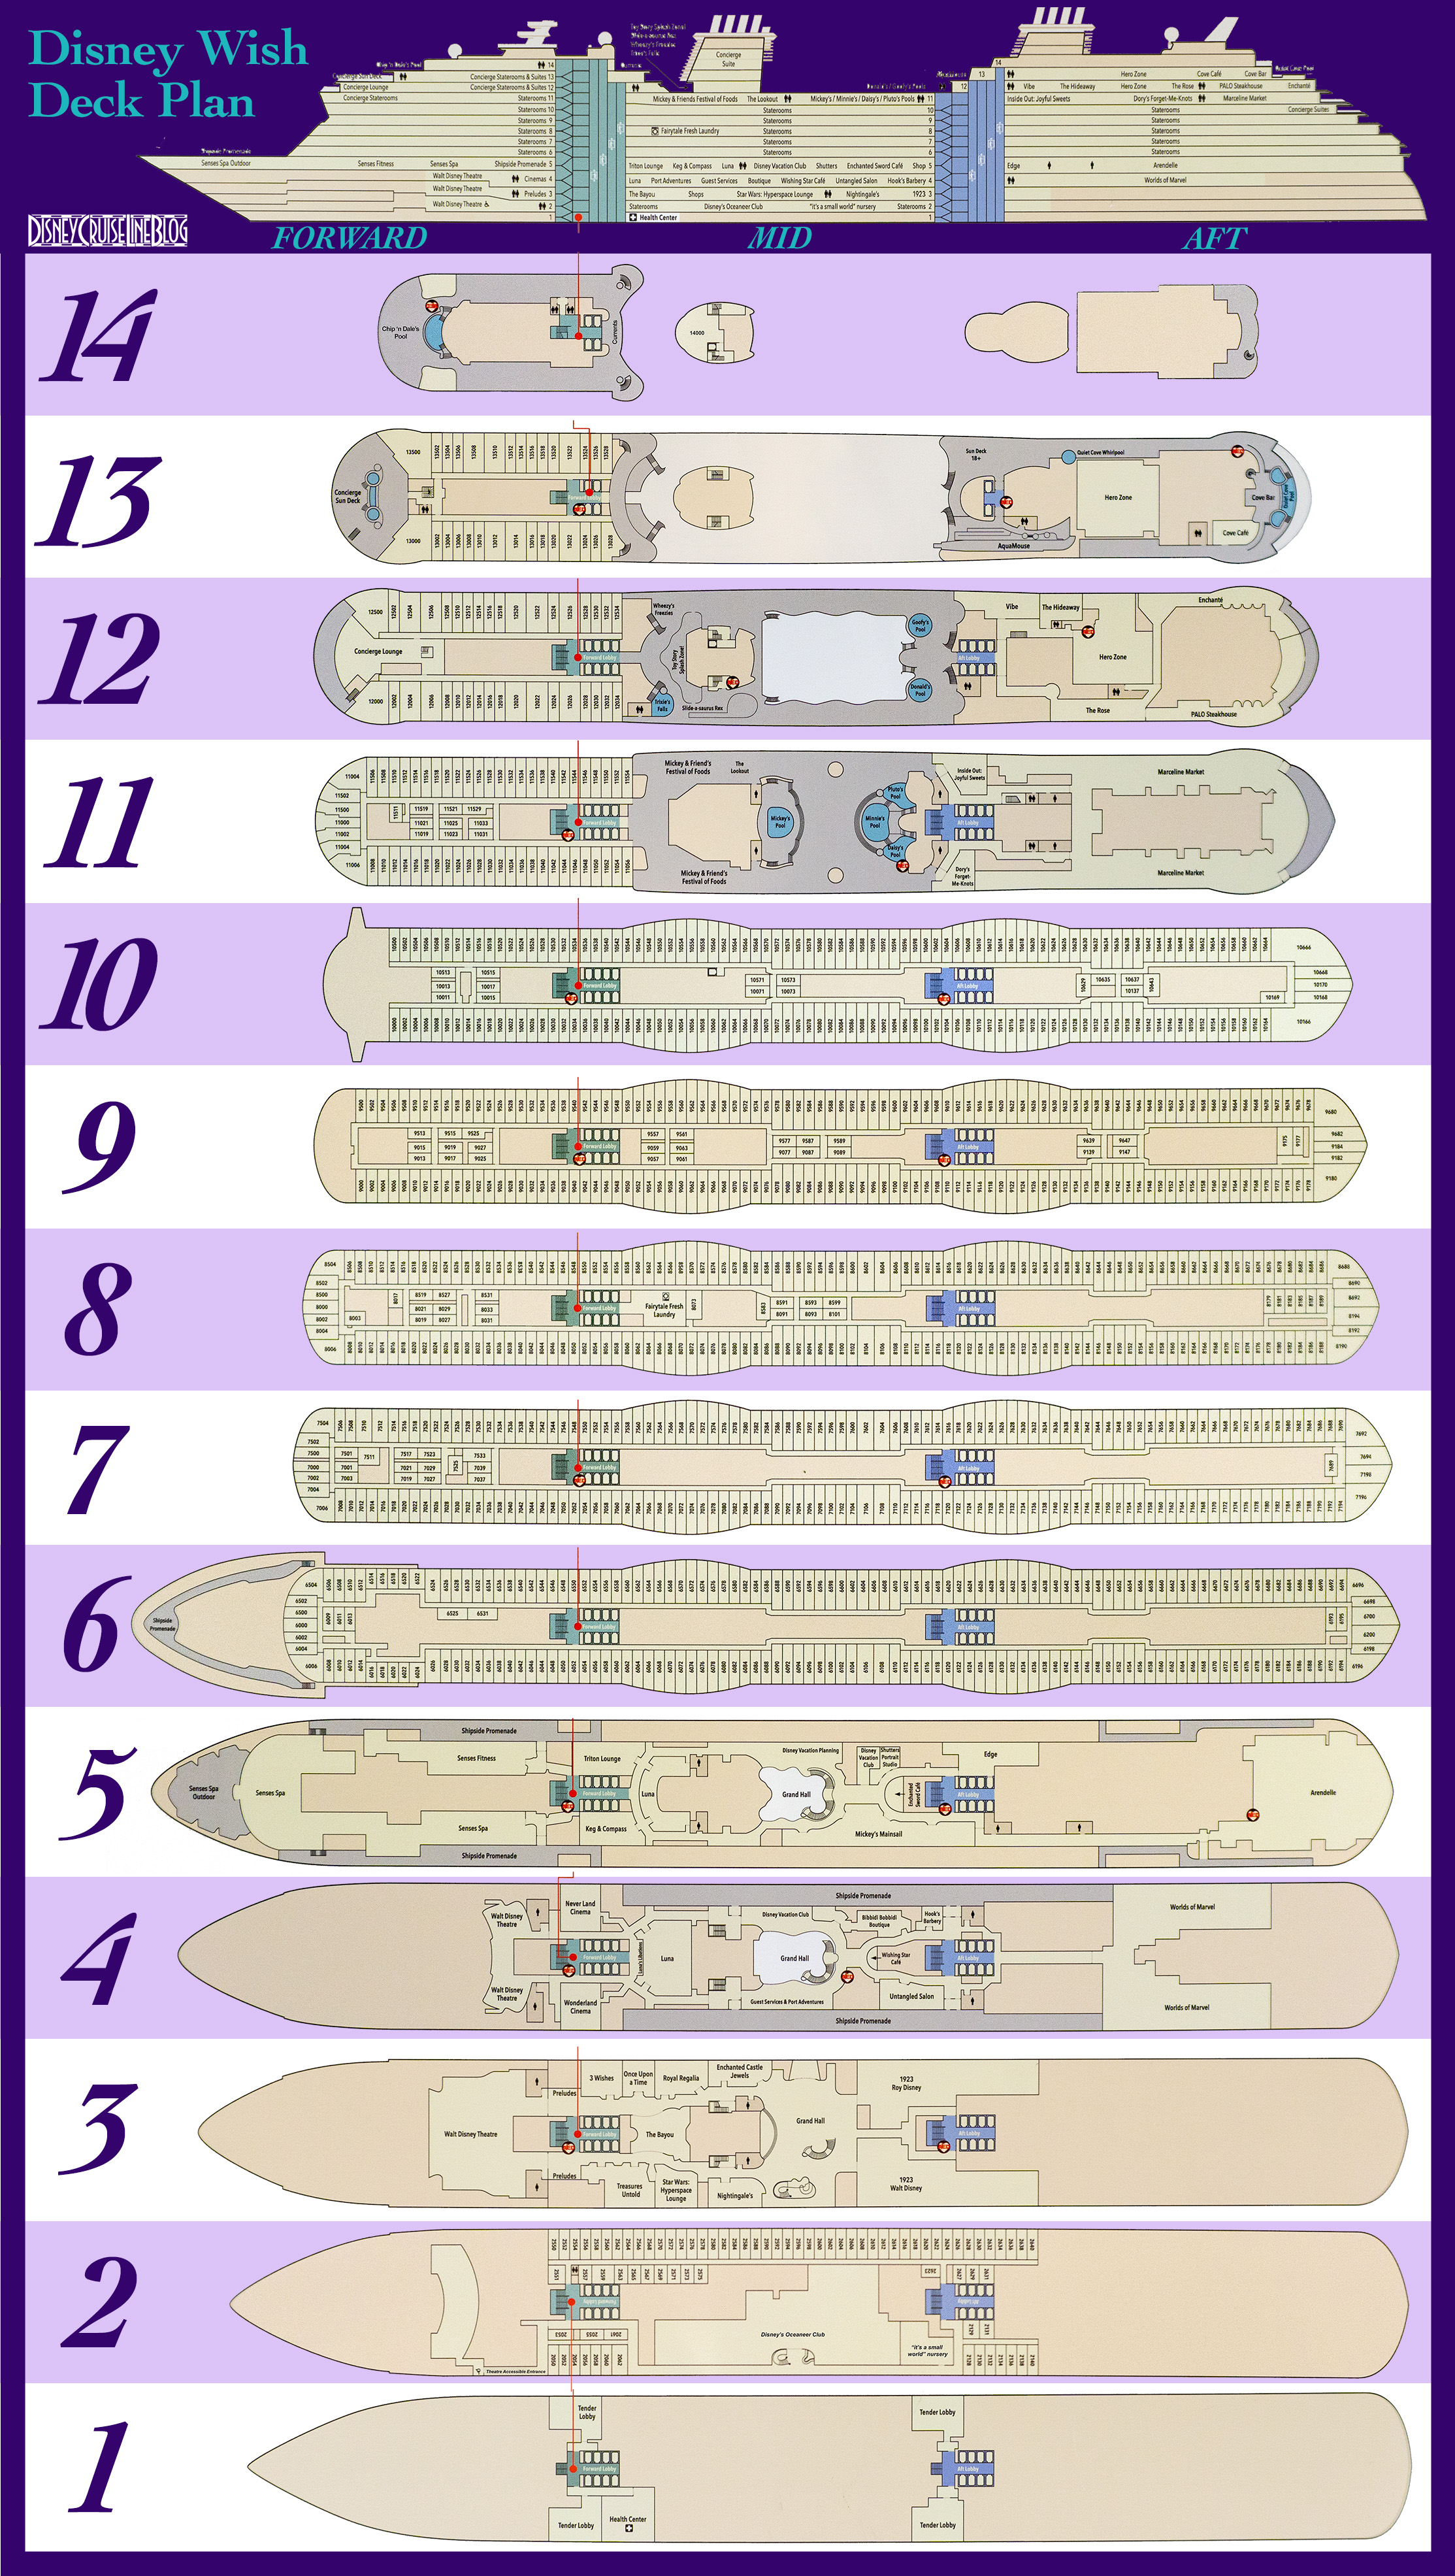 https://disneycruiselineblog.com/wp-content/uploads/2022/07/Disney-Wish-Deck-Plan-Guide.jpg